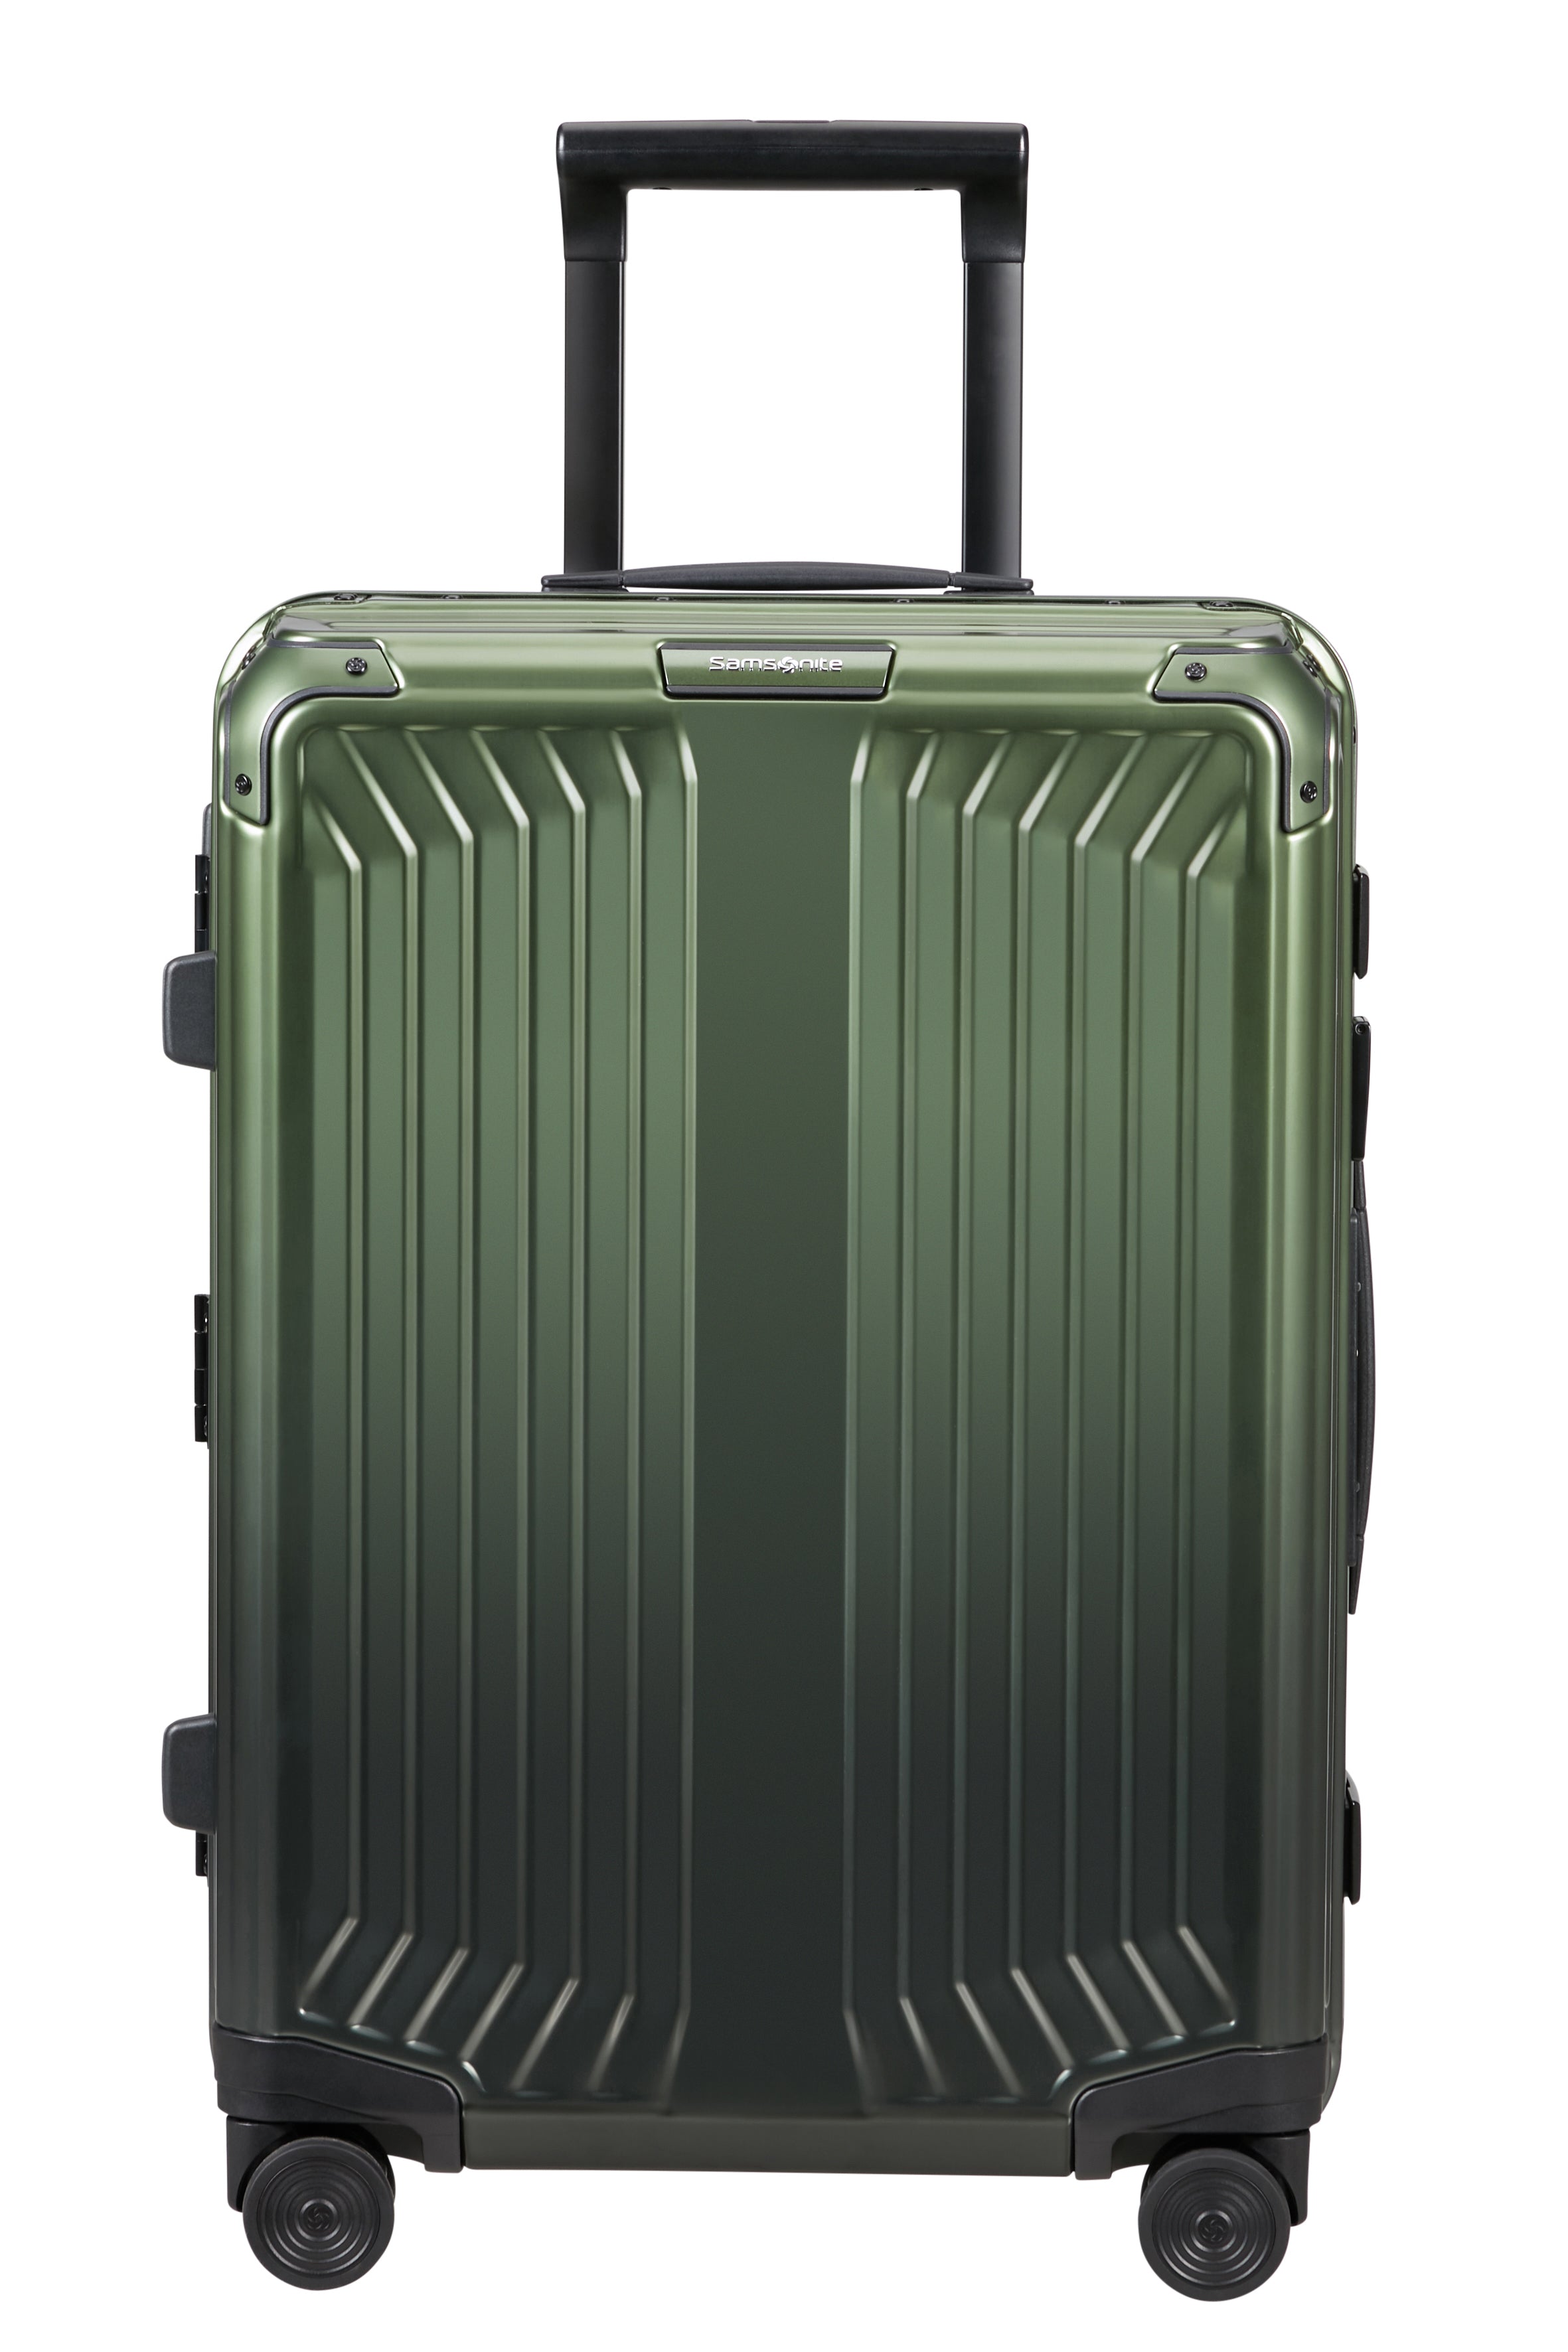 Samsonite - Lite Box ALU 55cm Small 4 Wheel Hard Suitcase - Gradient Green-13